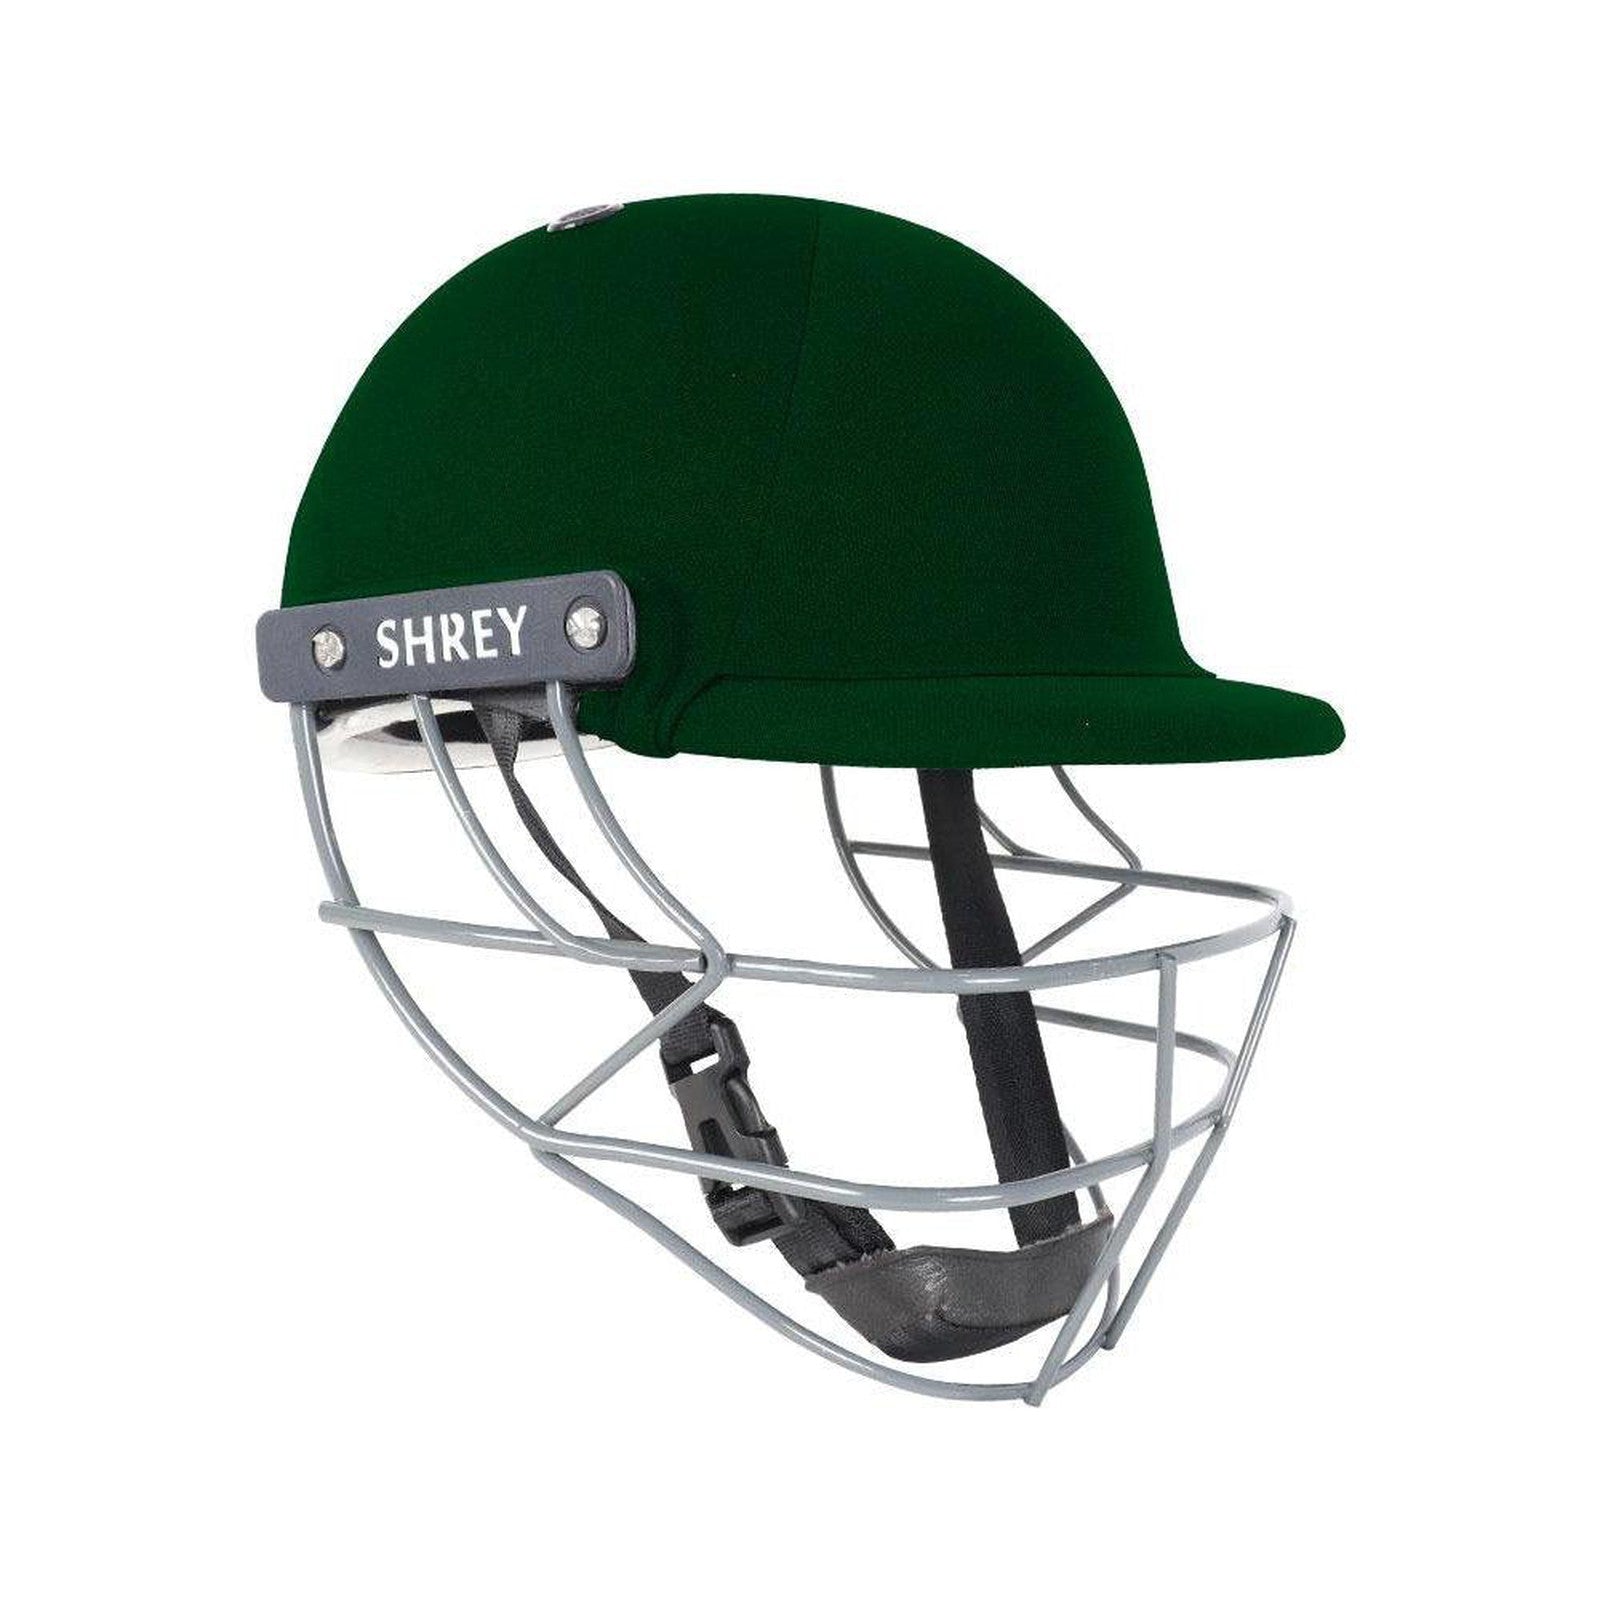 Shrey Performance 2.0 Cricket Helmet With Mild Steel - Green Senior